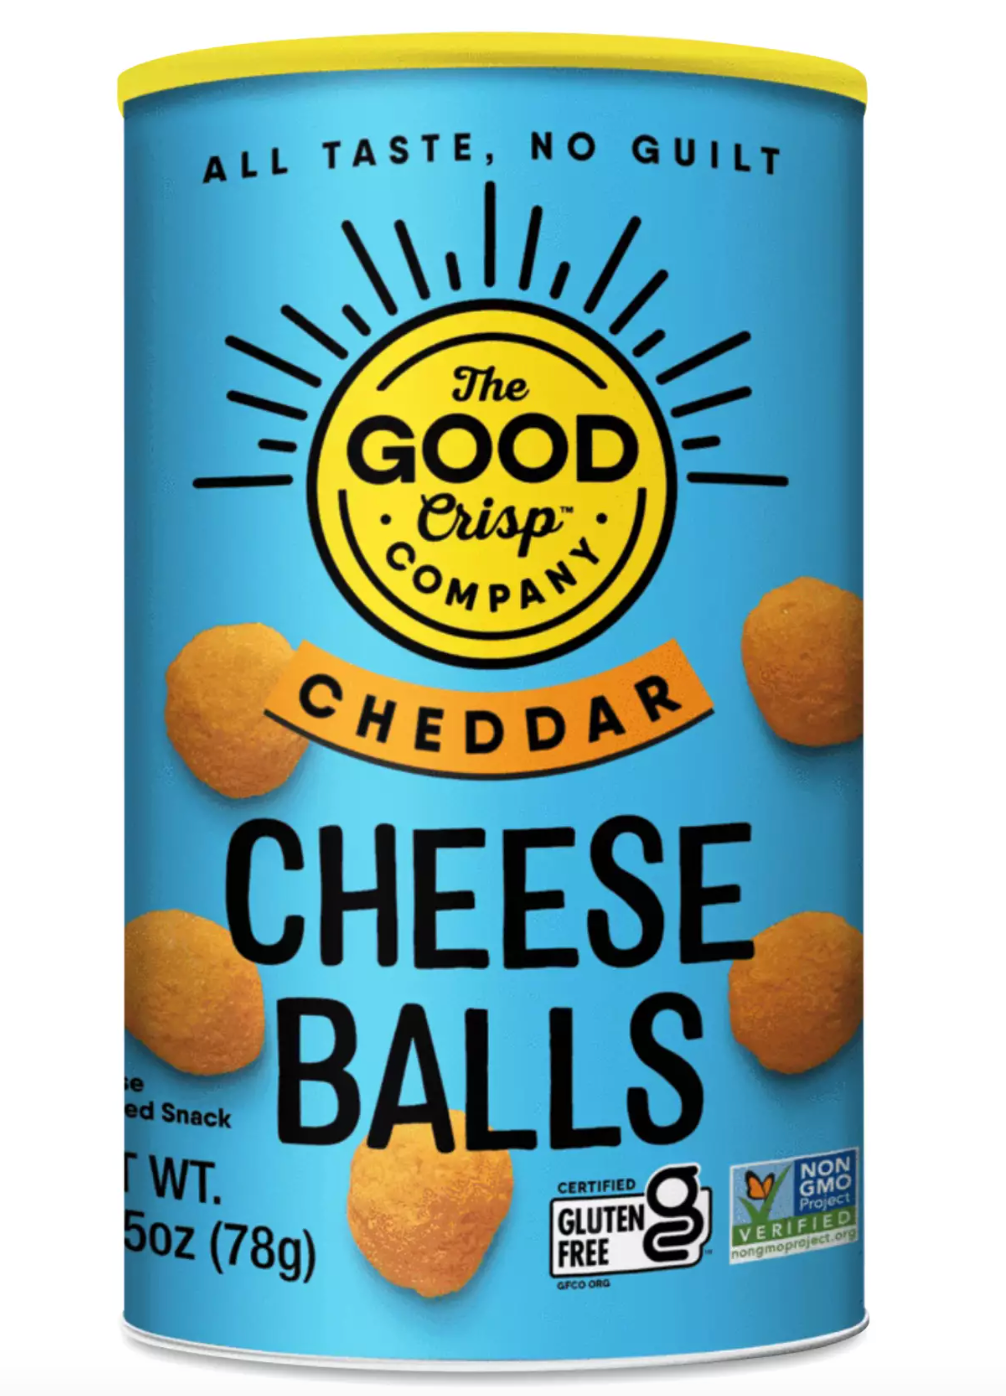 The Good Crisp Co. Cheddar Cheese Balls